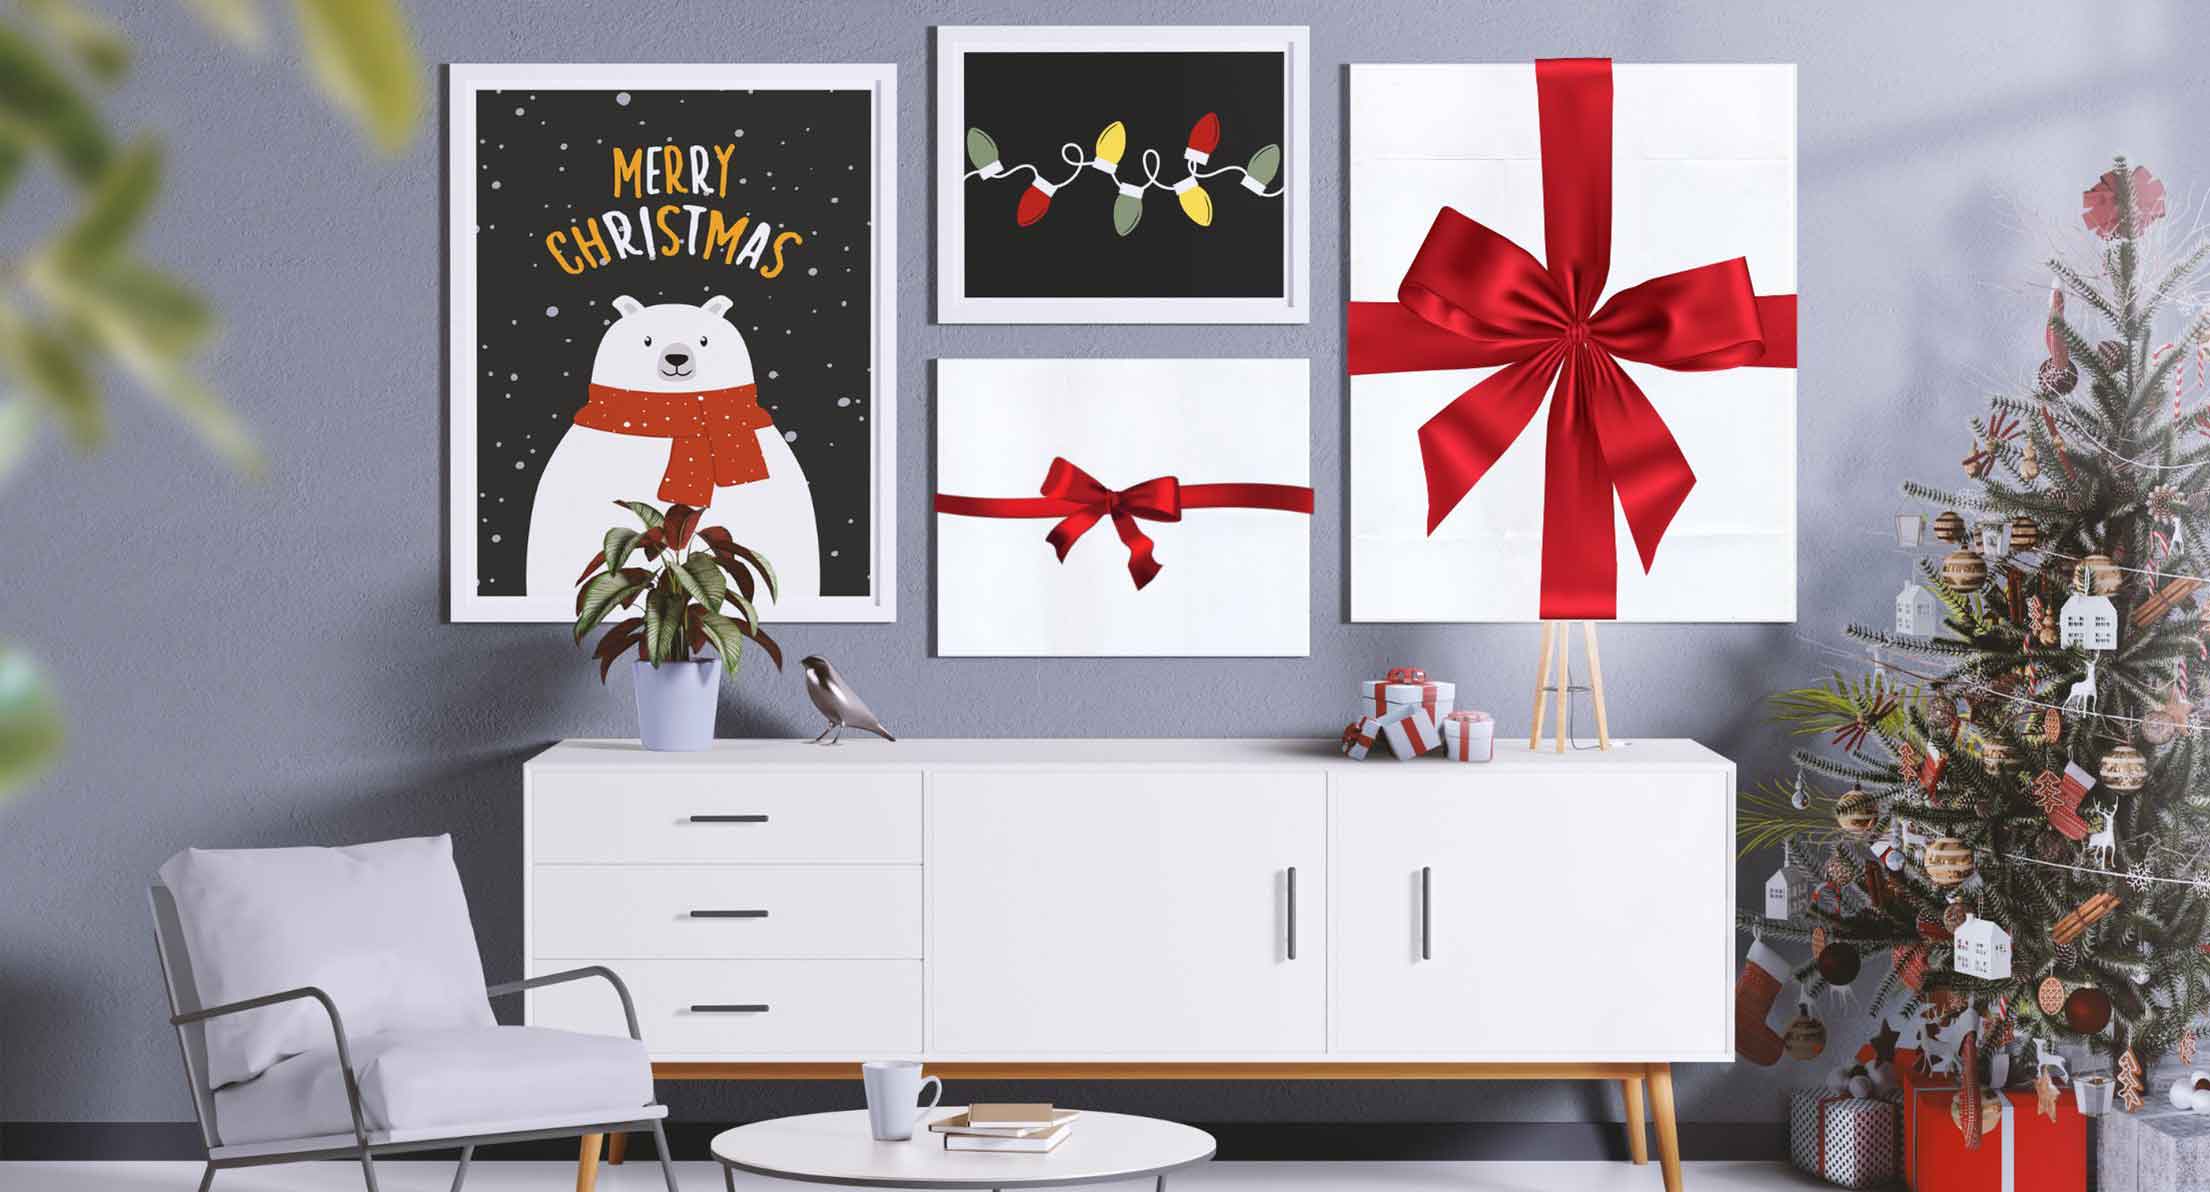 Gift ideas for Christmas season